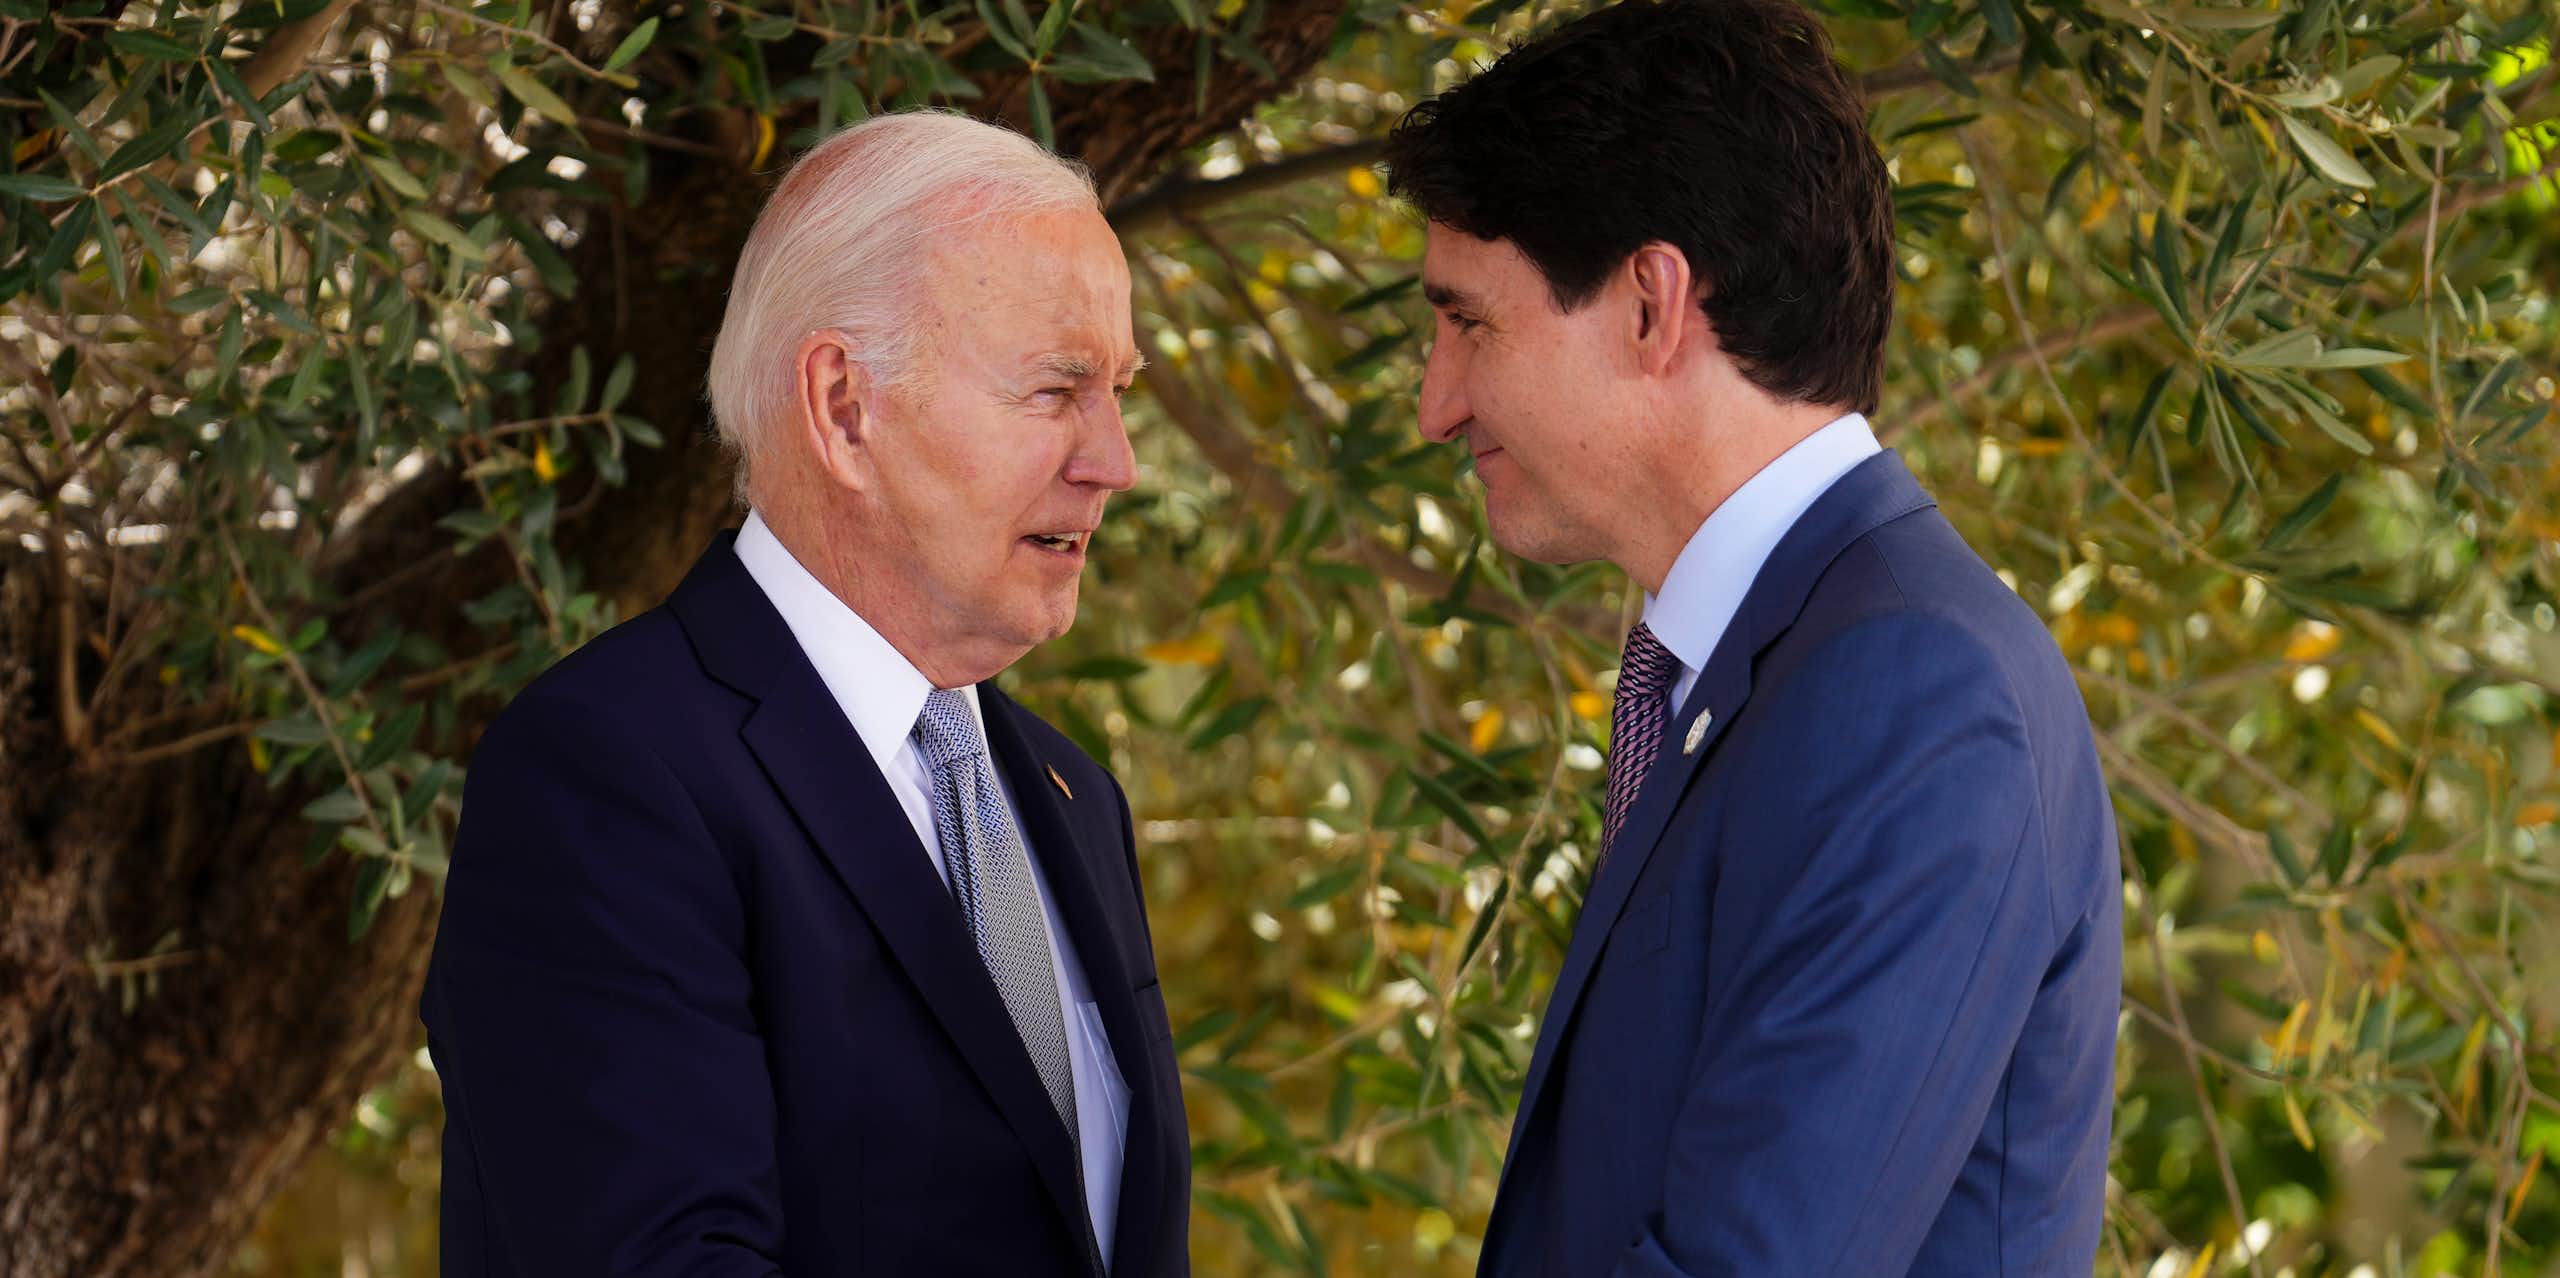 Trudeau on the right grasps Biden's hand.